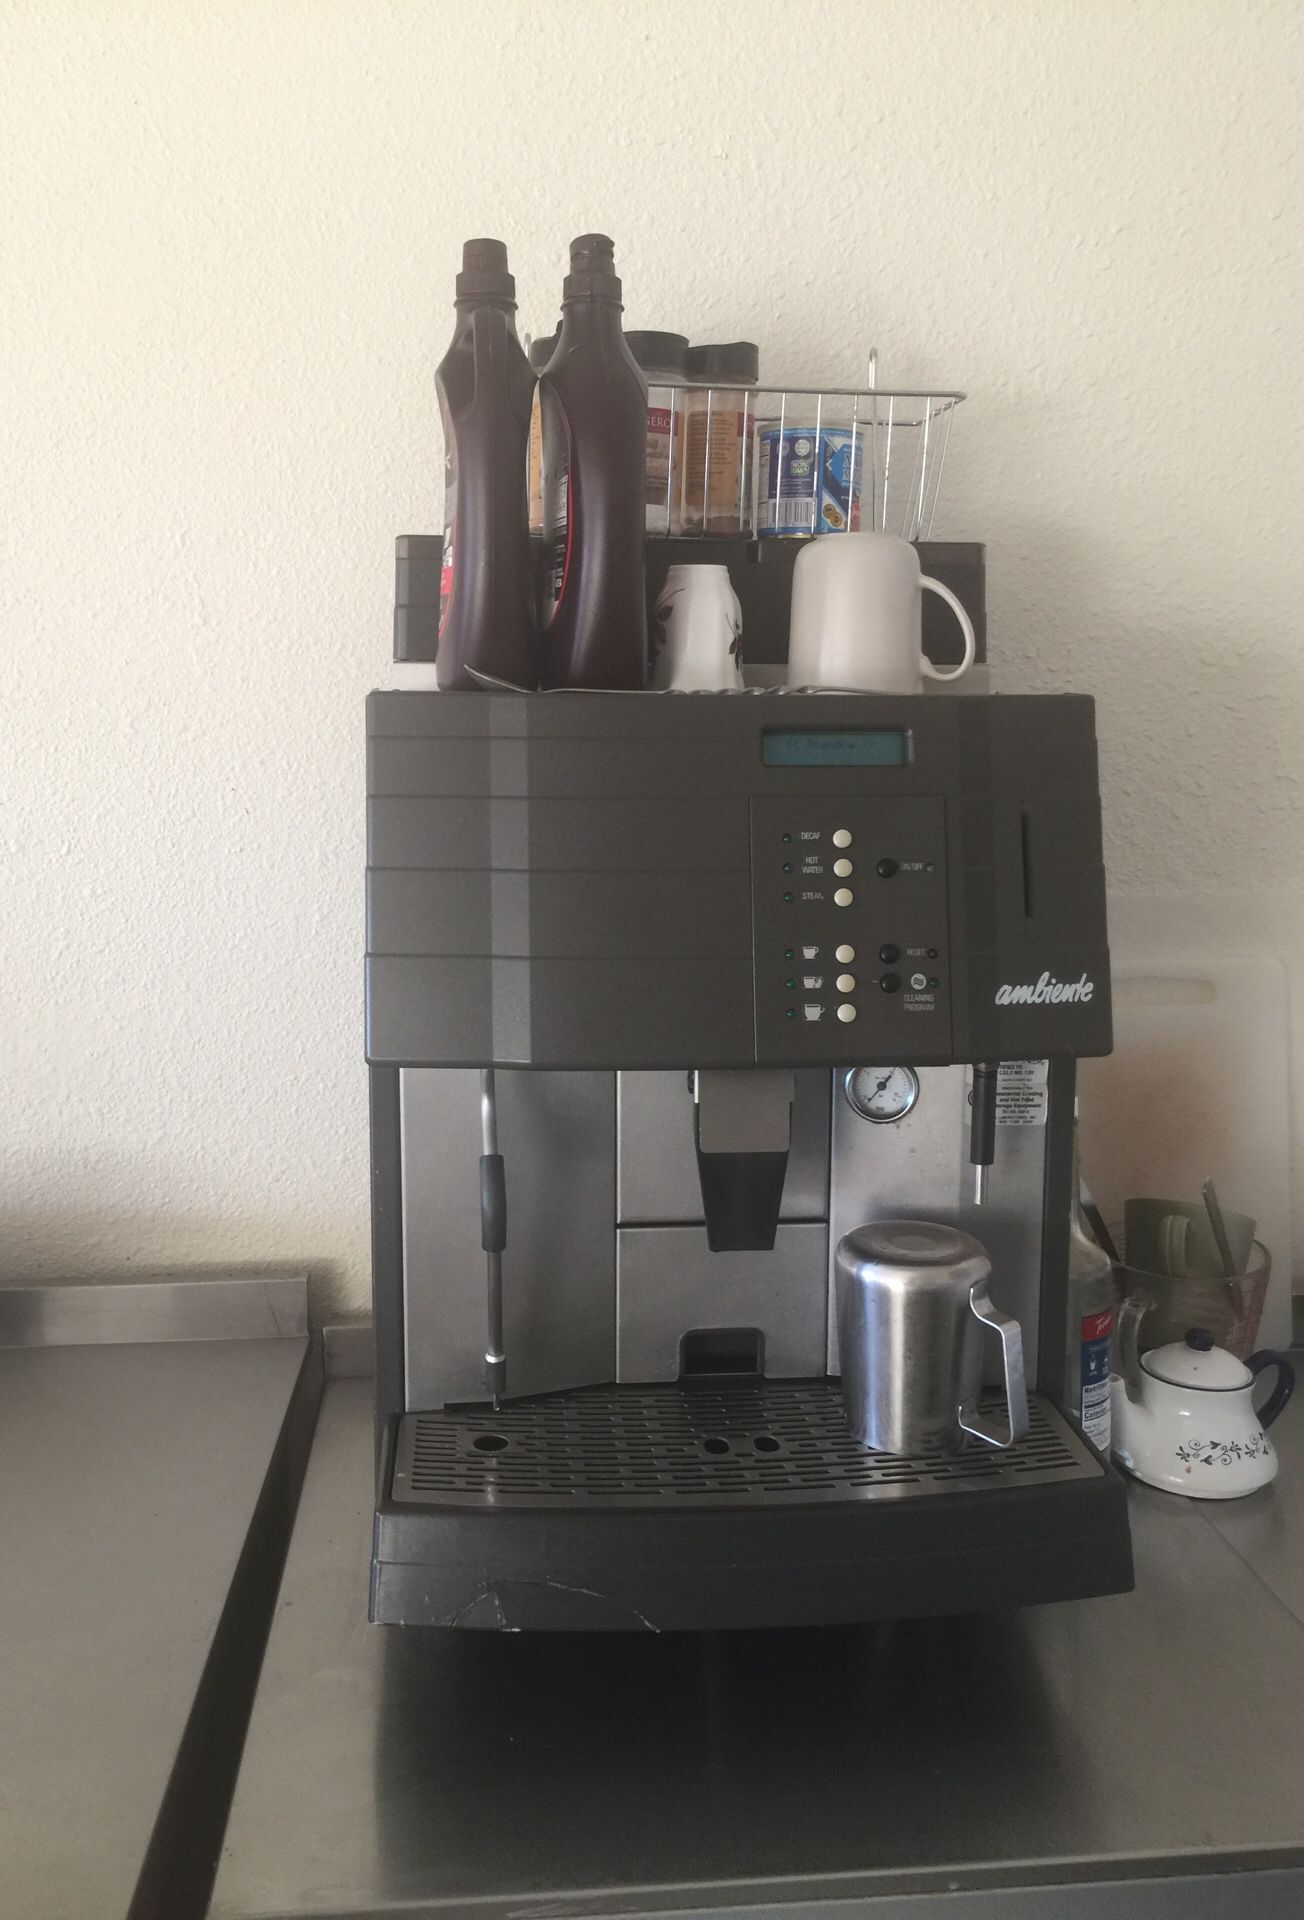 Schaerer Ambiente espresso machine super automatic